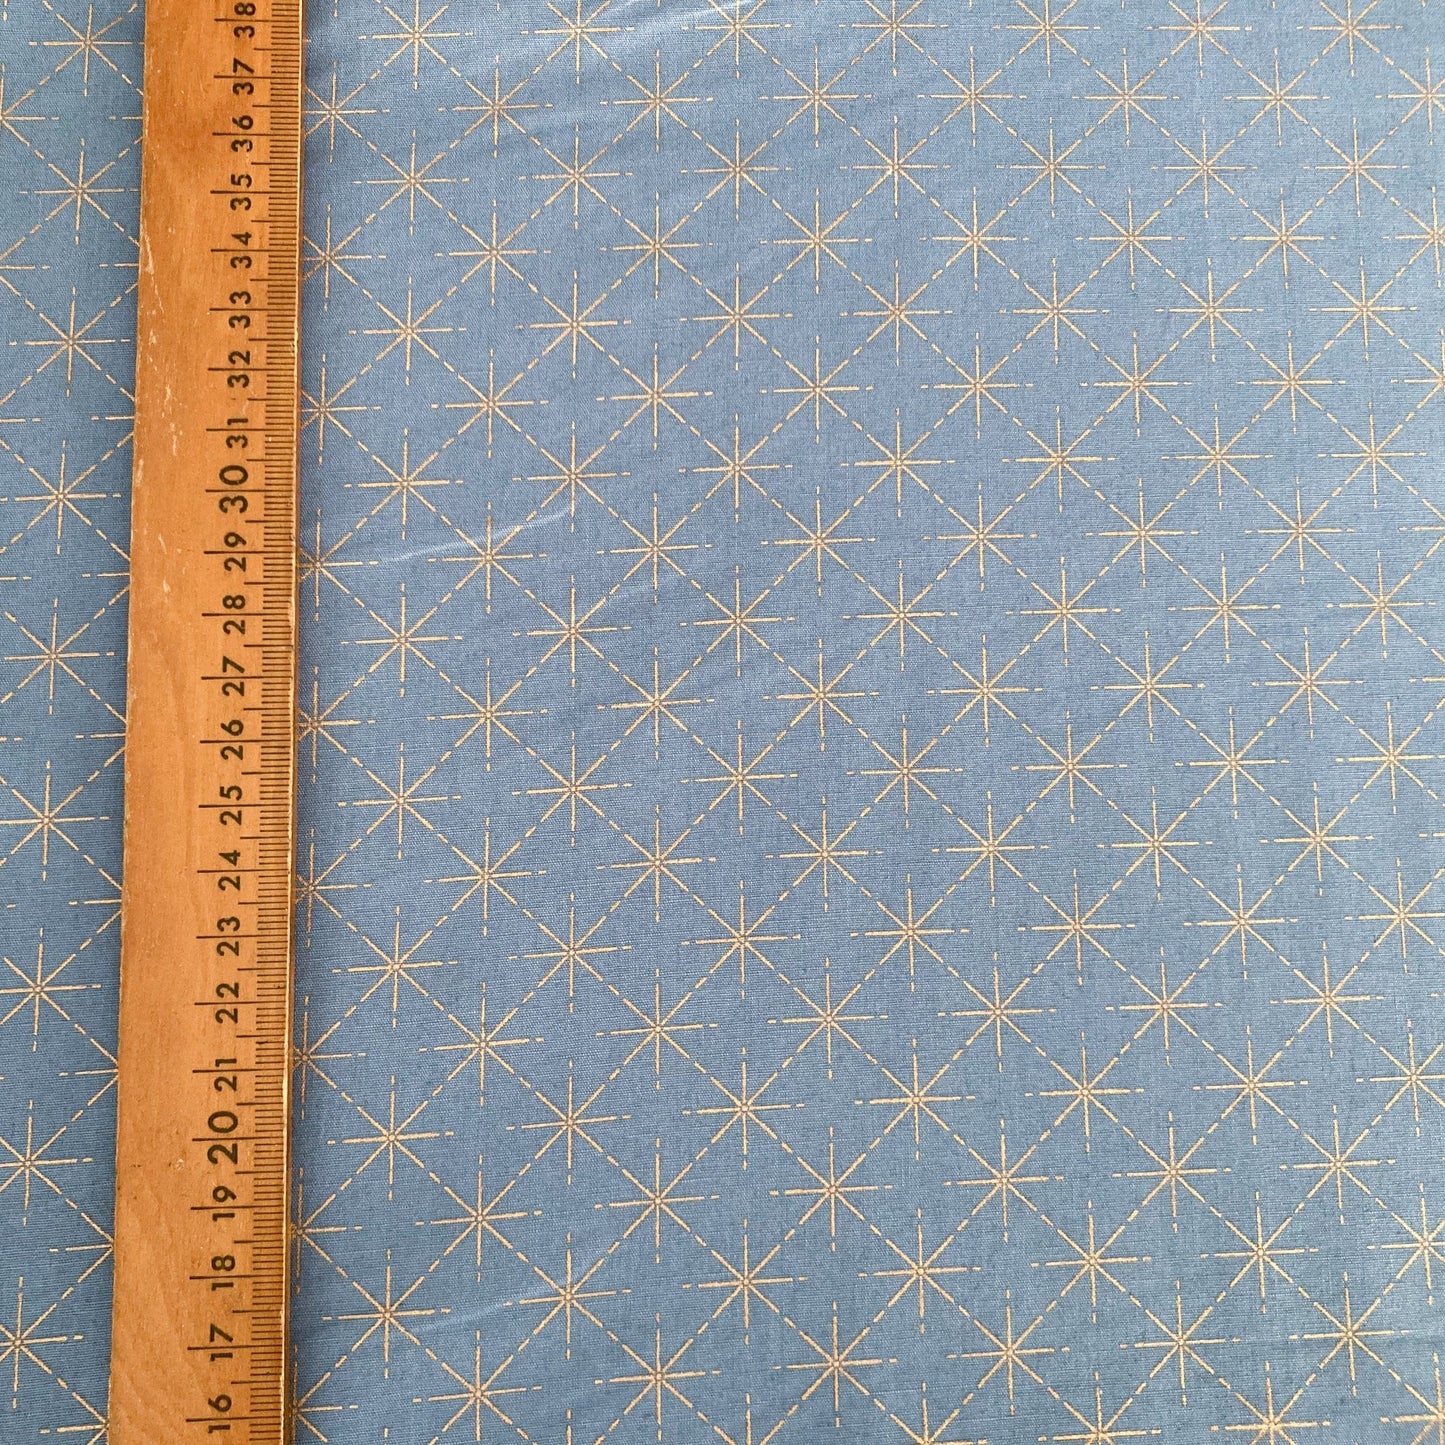 Cotton Fabric in Denim Blue with Metallic Starburst Print